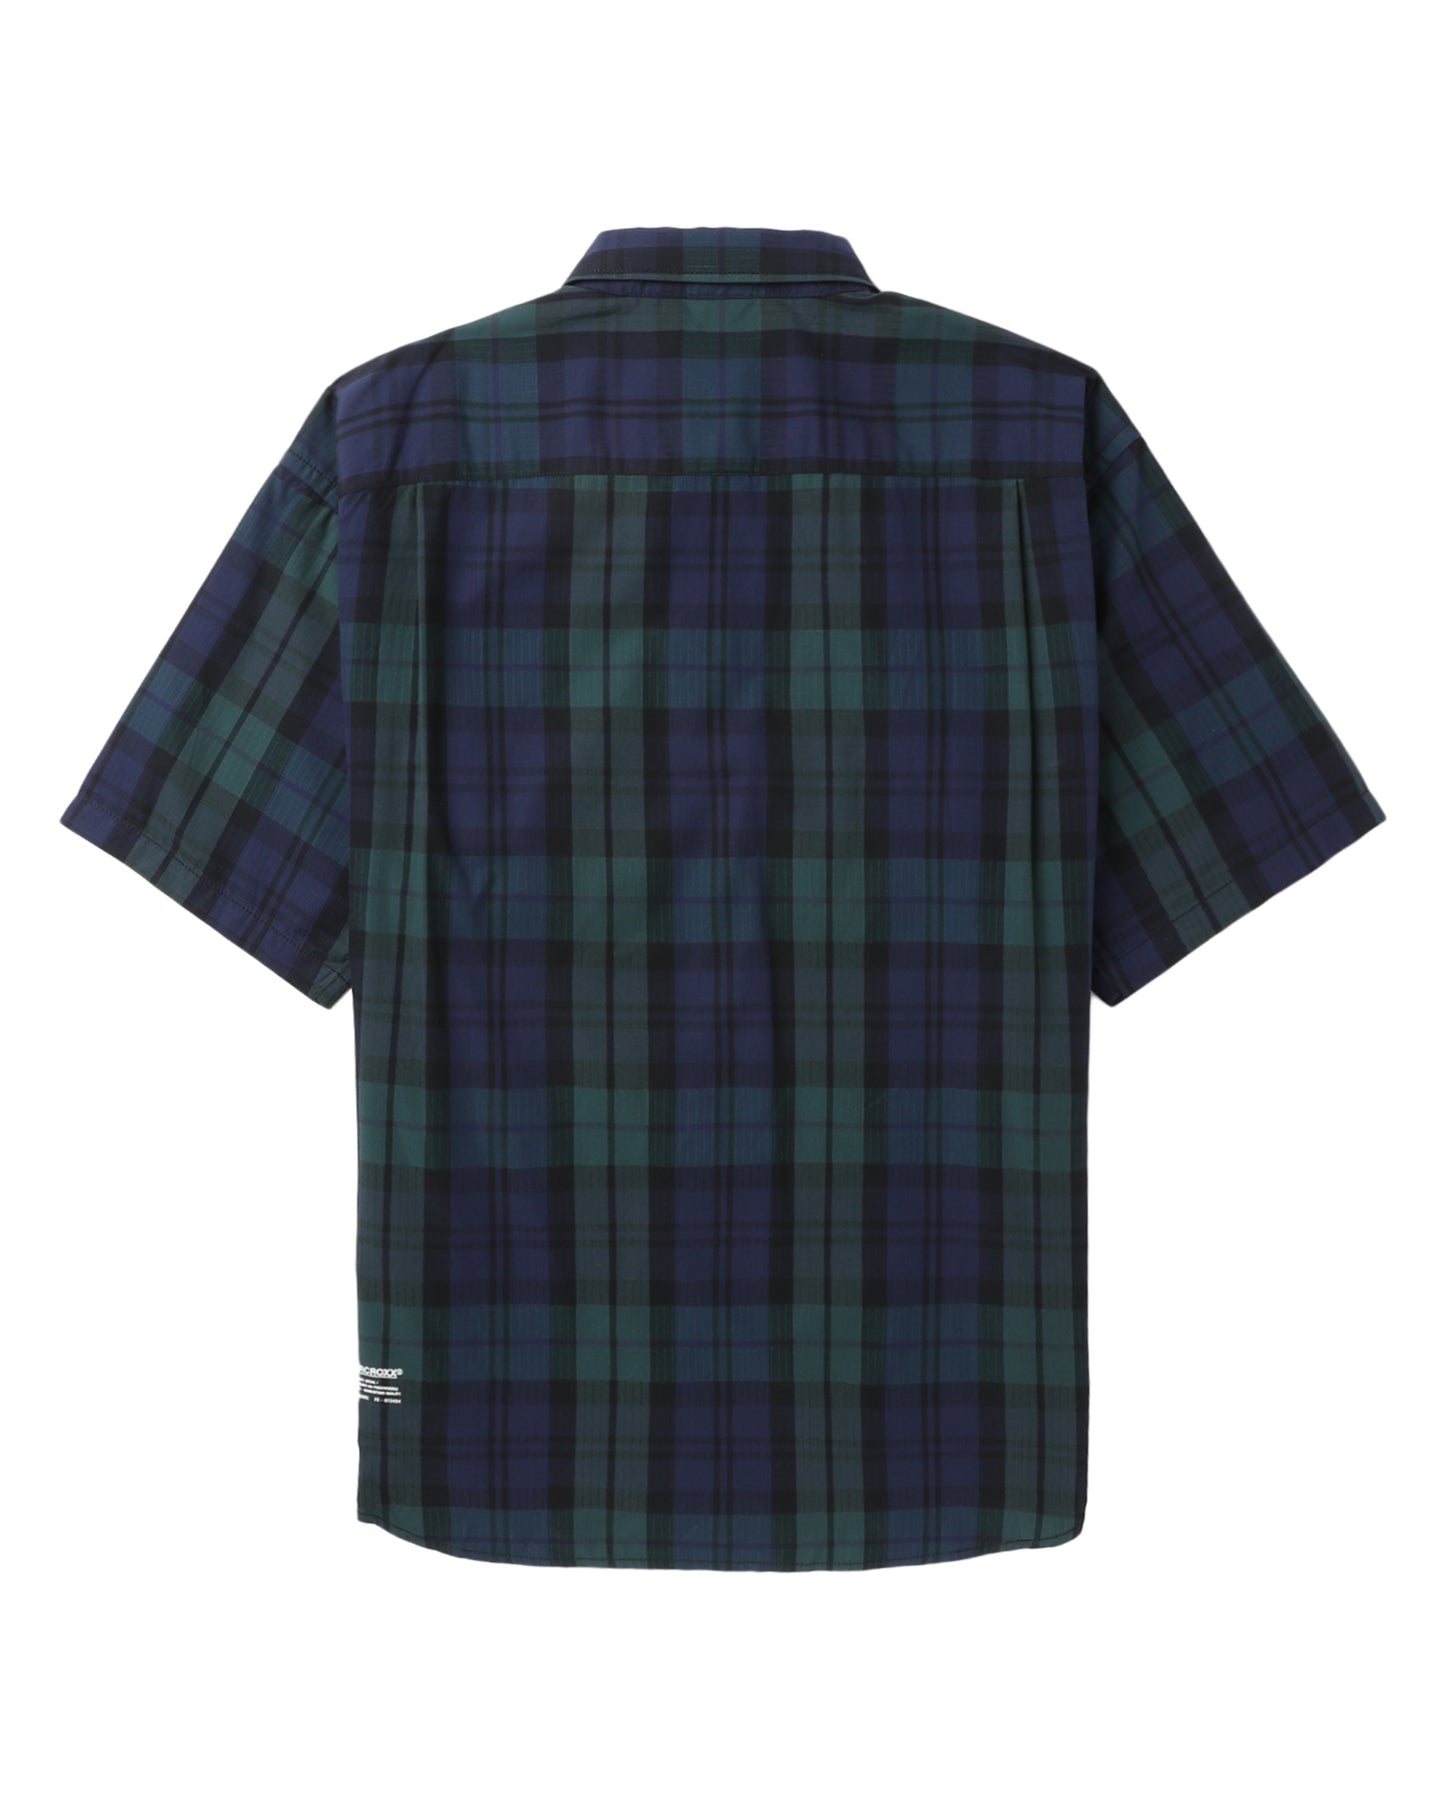 Men's - Checkered Shirt in Blue & Green